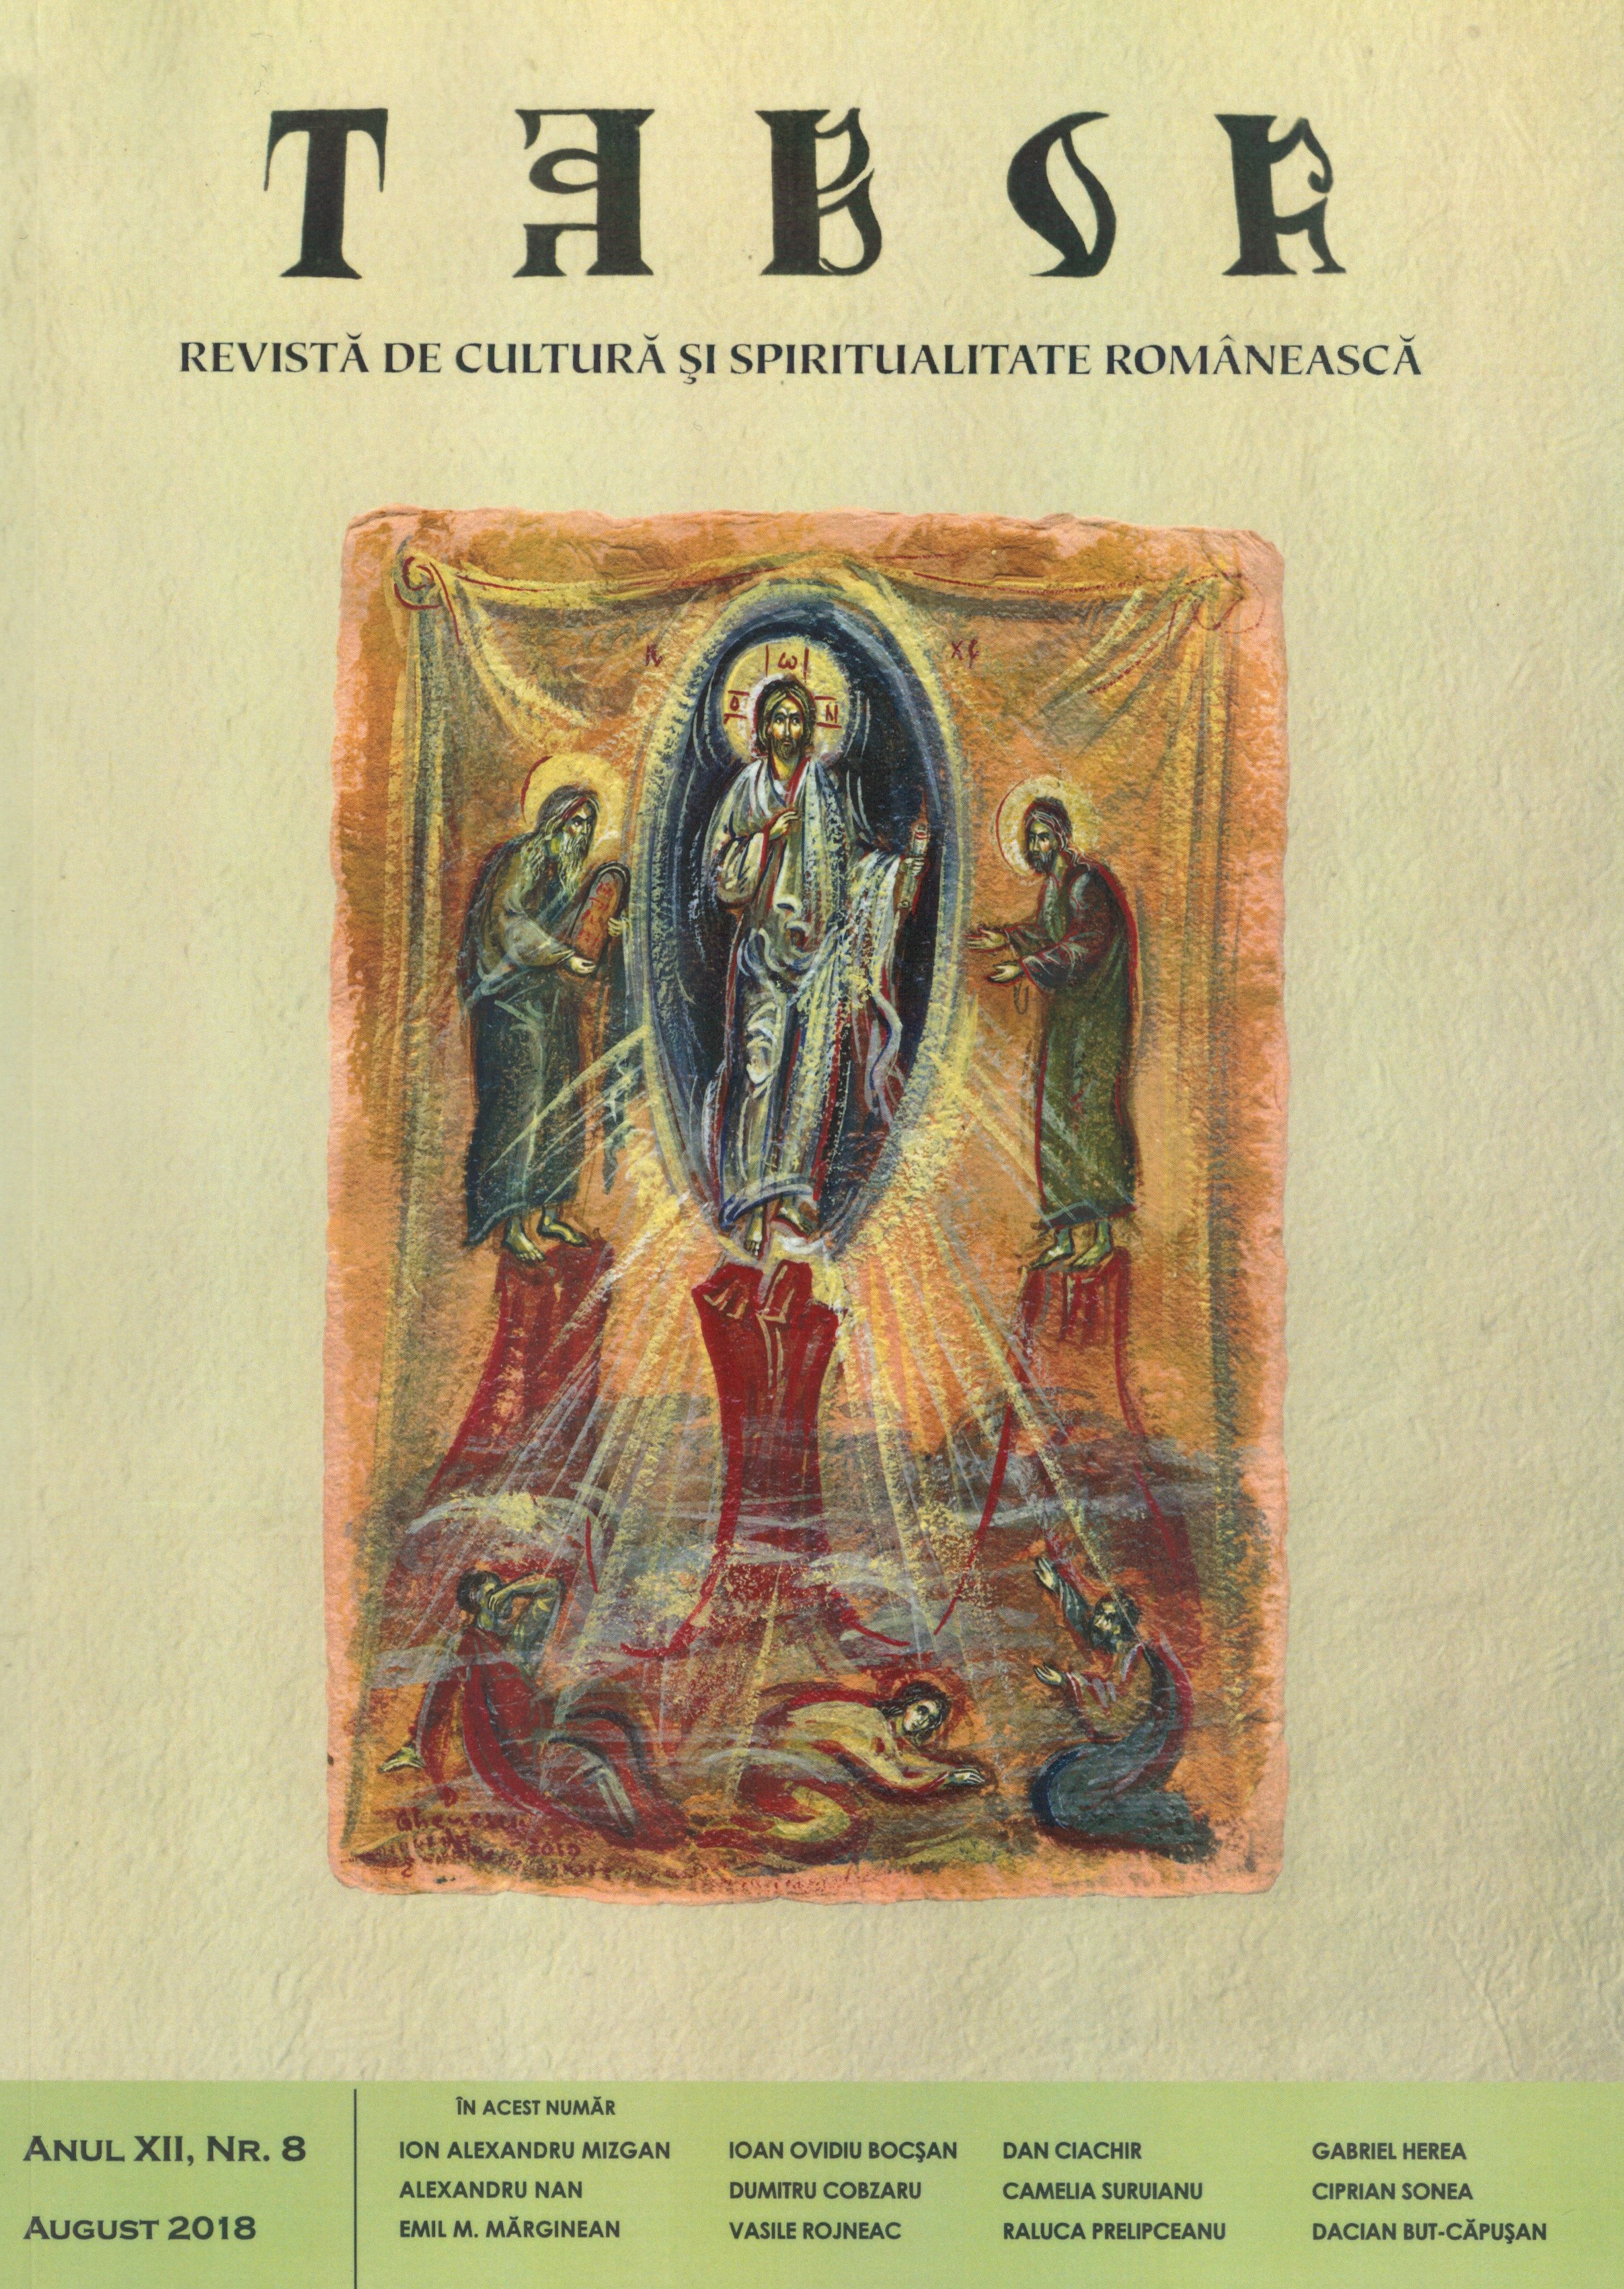 Commemorating Bartolomeu Valeriu Anania Cover Image